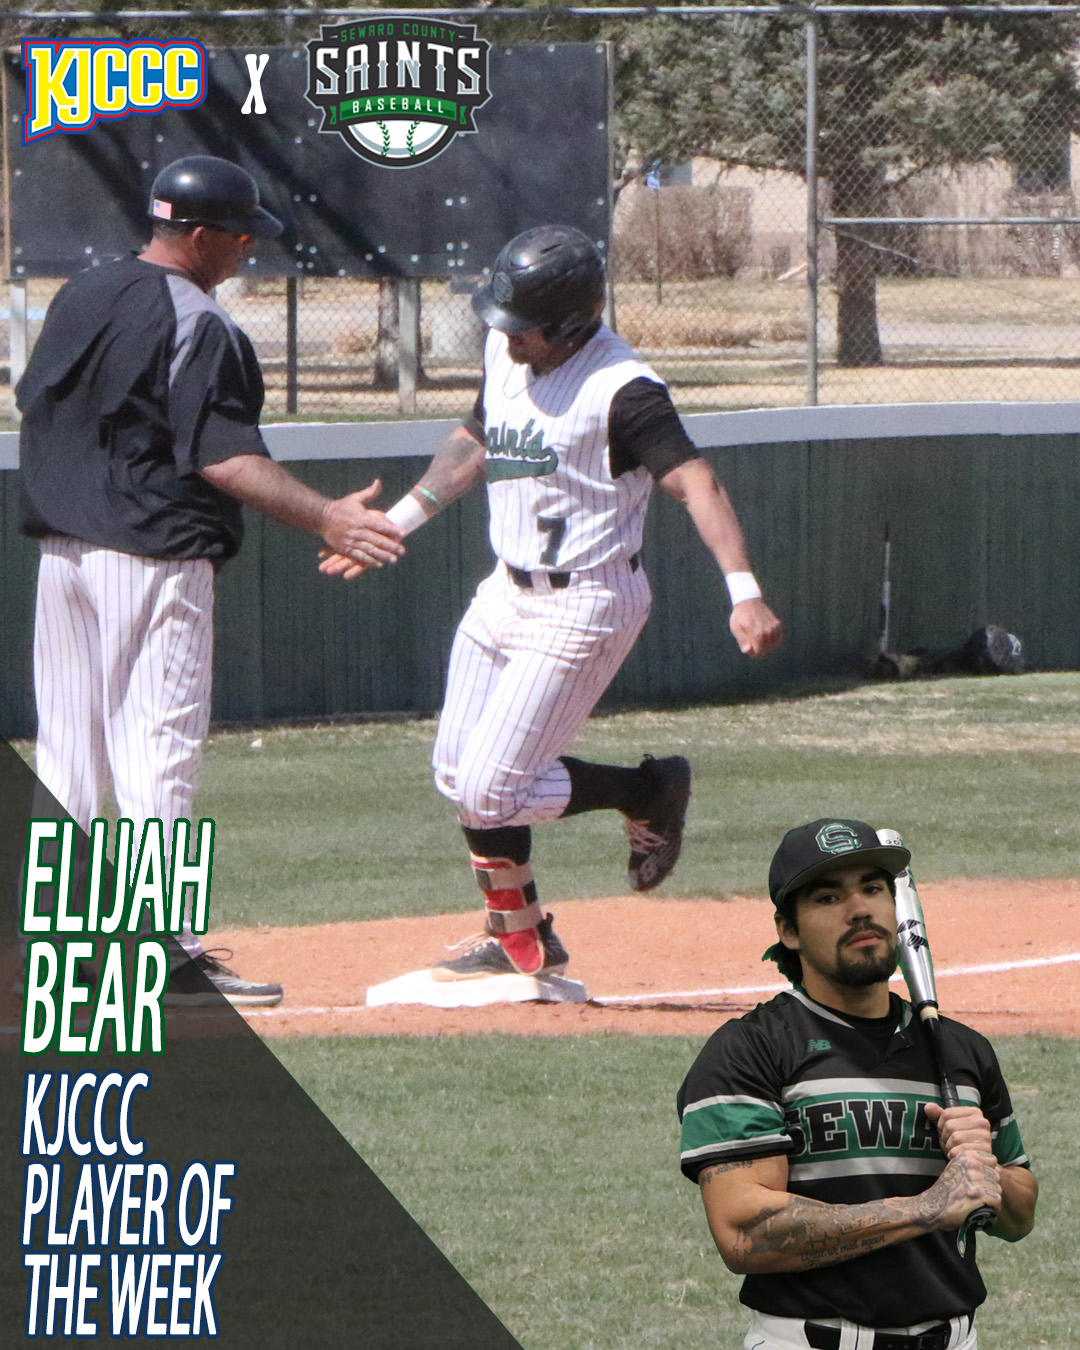 Seward’s Elijah Bear KJCCC and NJCAA Player of the Week